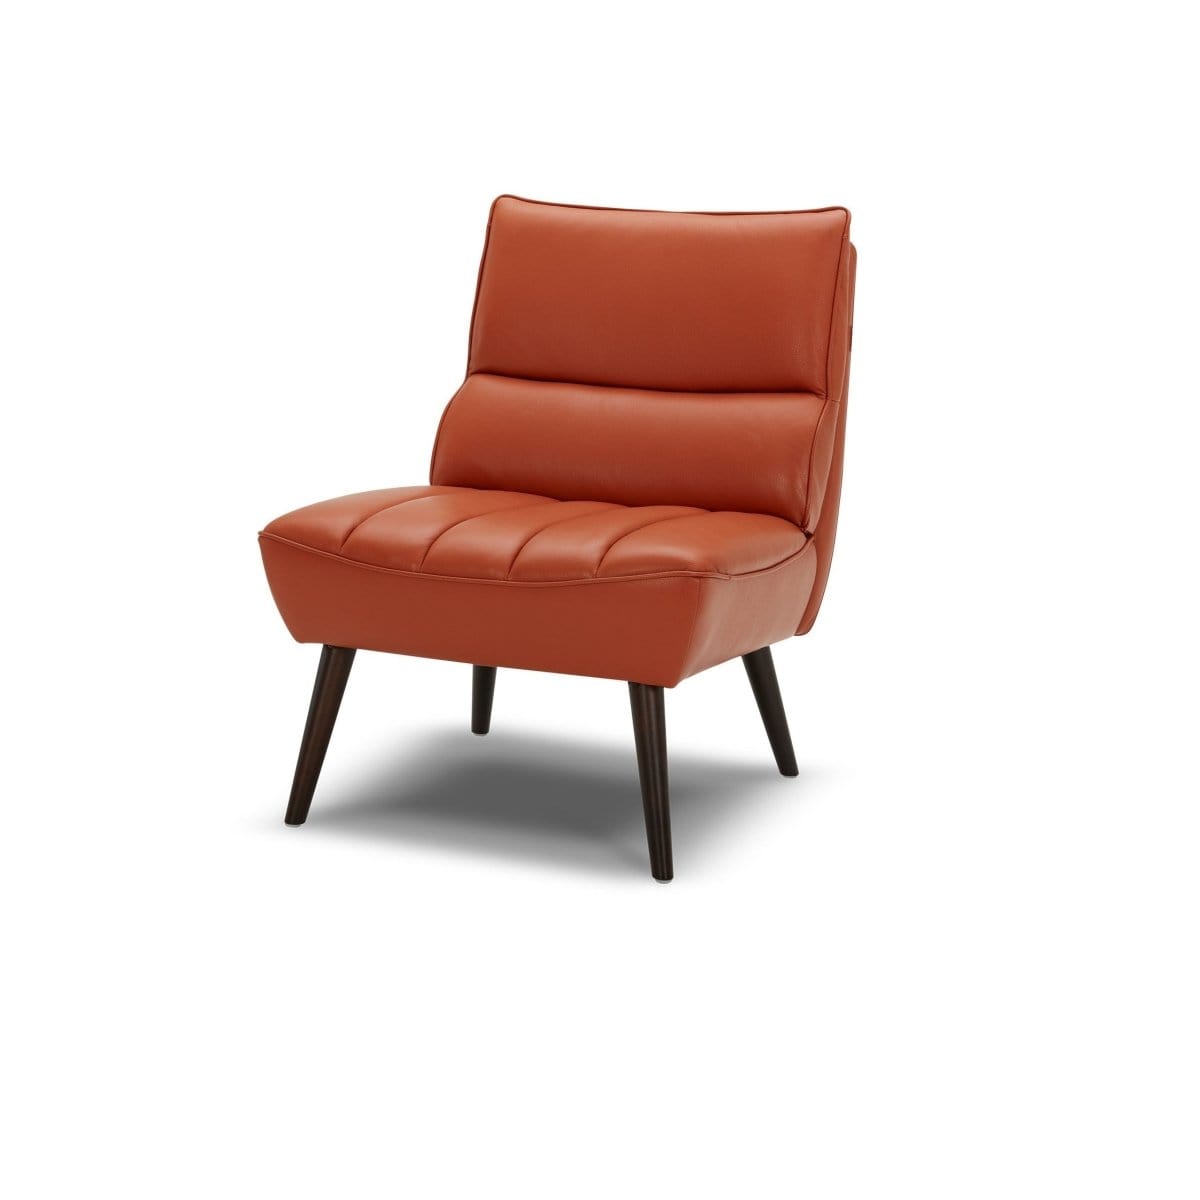 KUKA #KF.A067 Leather Lounge Chair (I) picket and rail